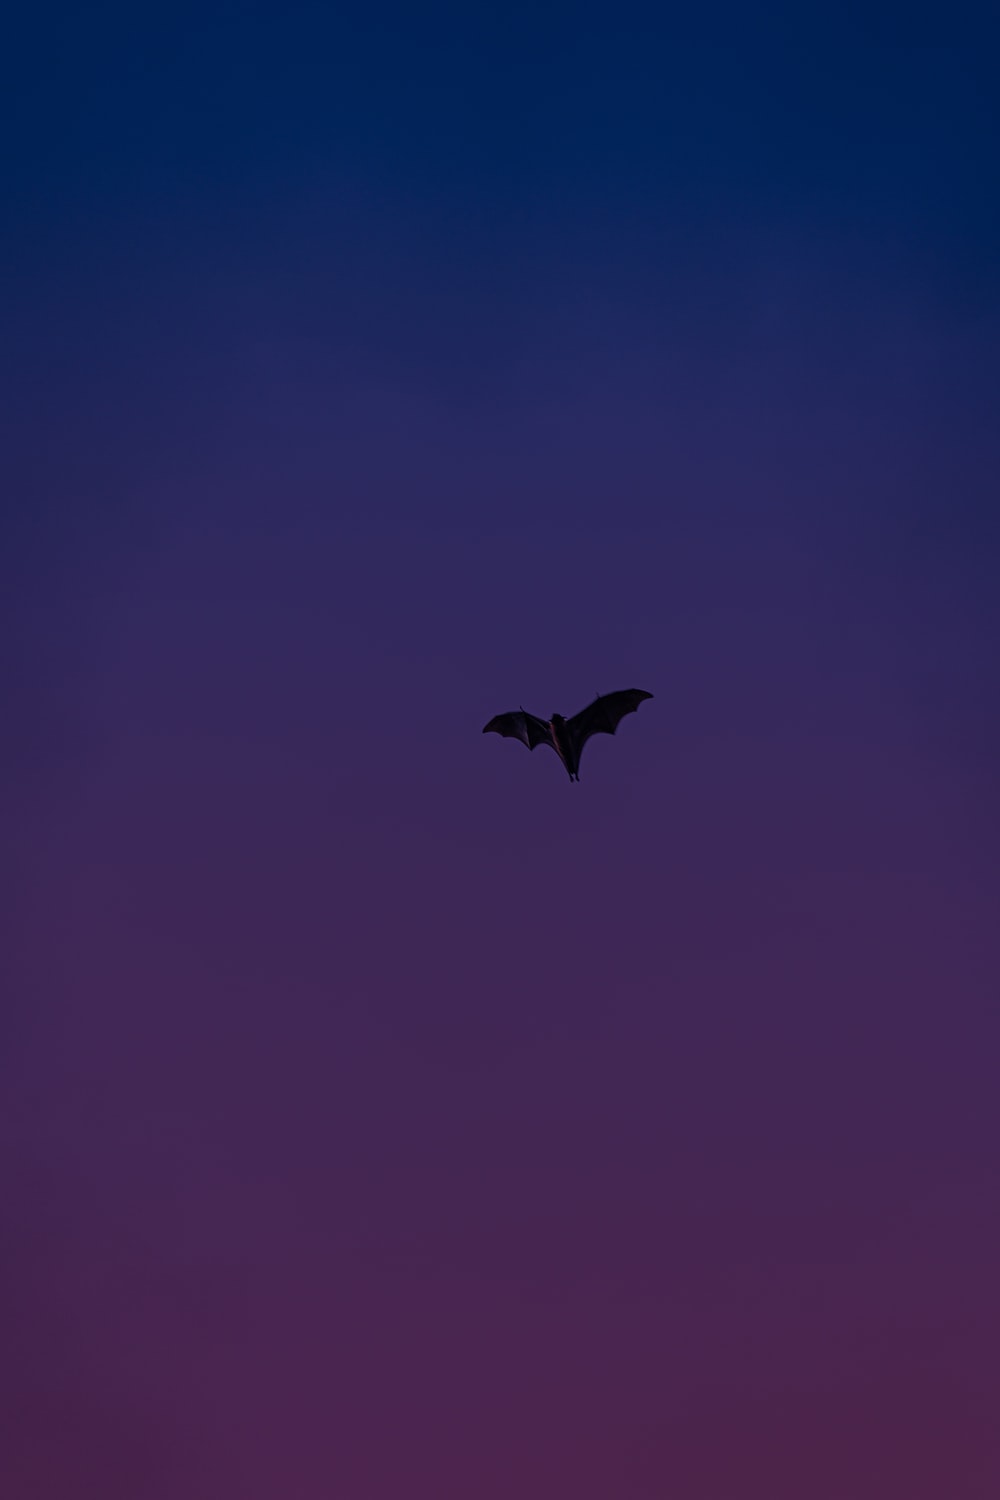 Bat Pictures HD Image